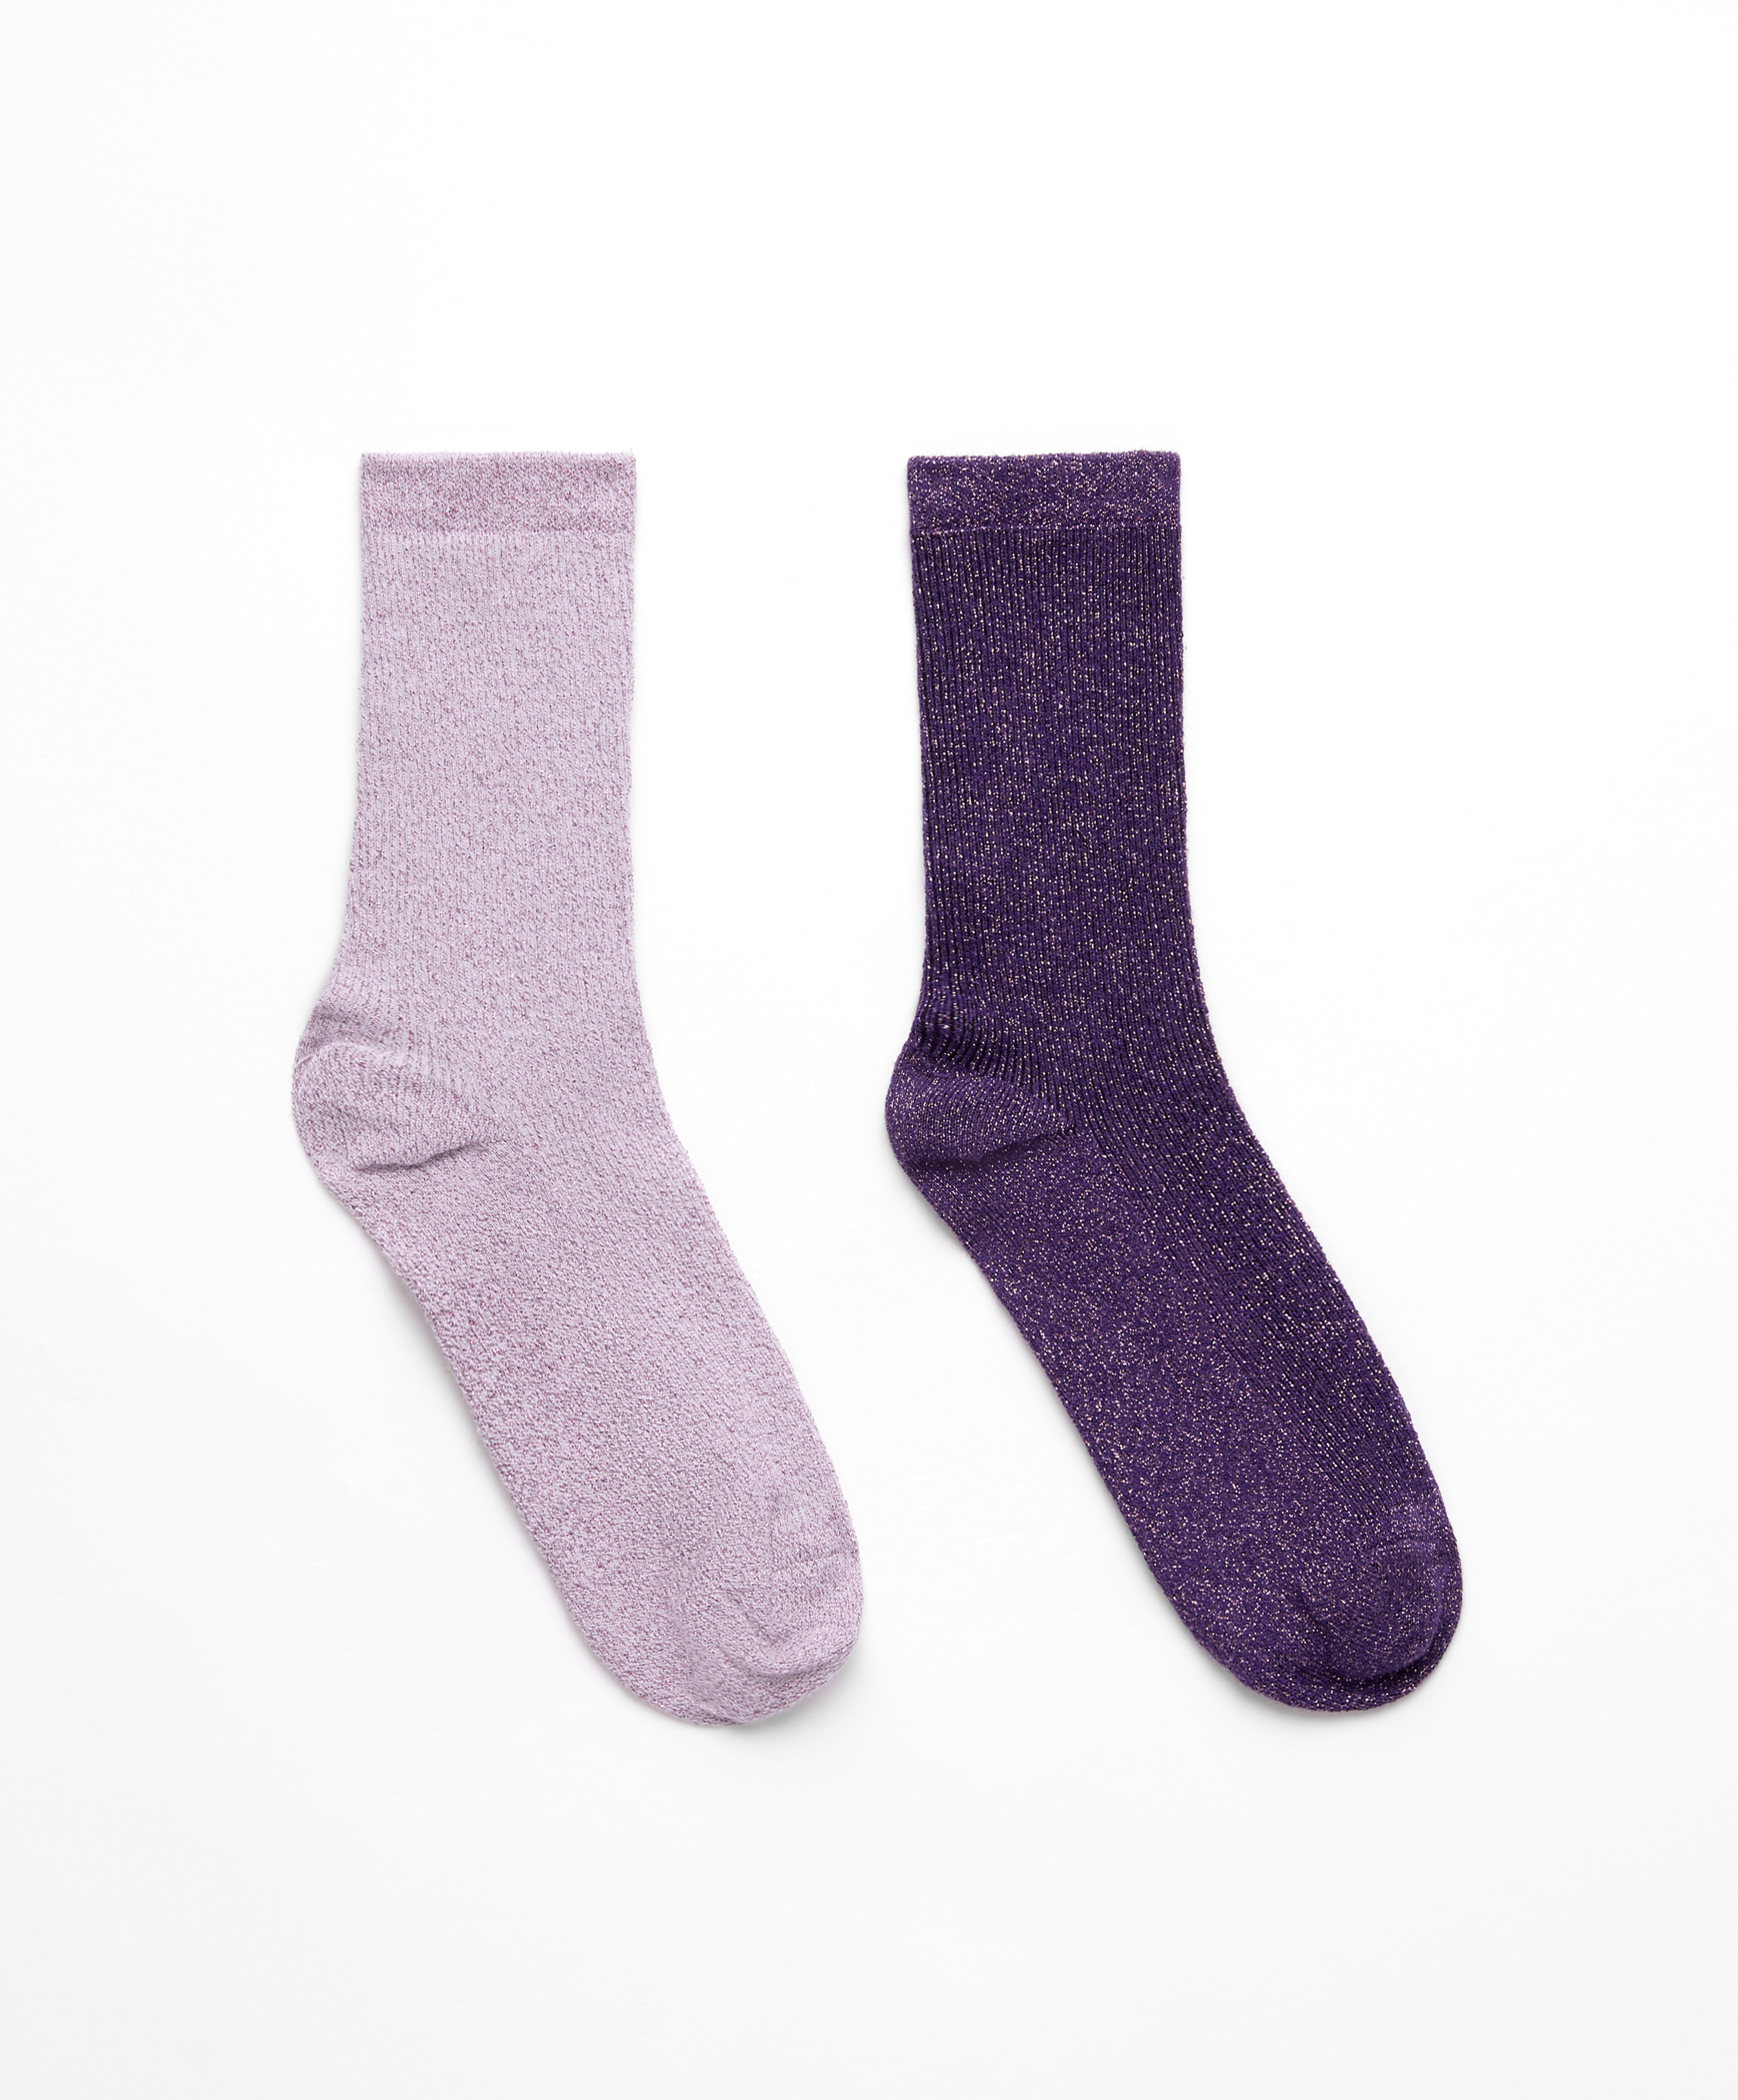 2 pairs of cotton classic socks